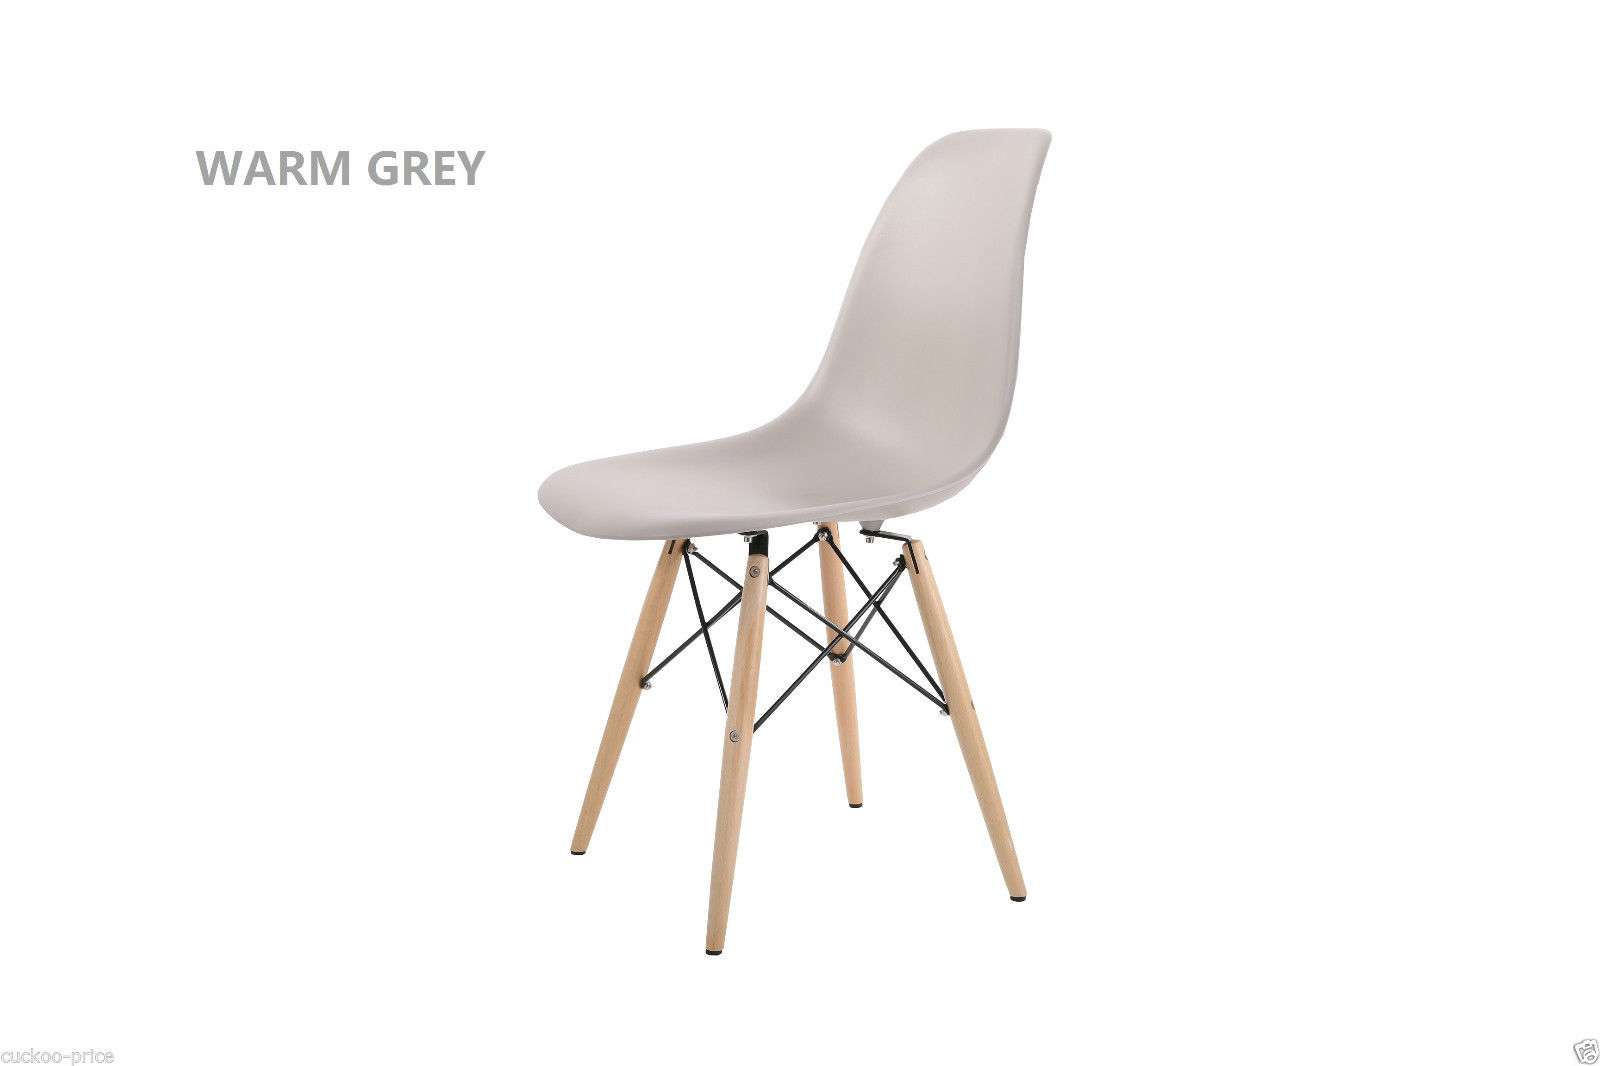 Budget Designer Epsom Designer Warm Grey Dining Chair